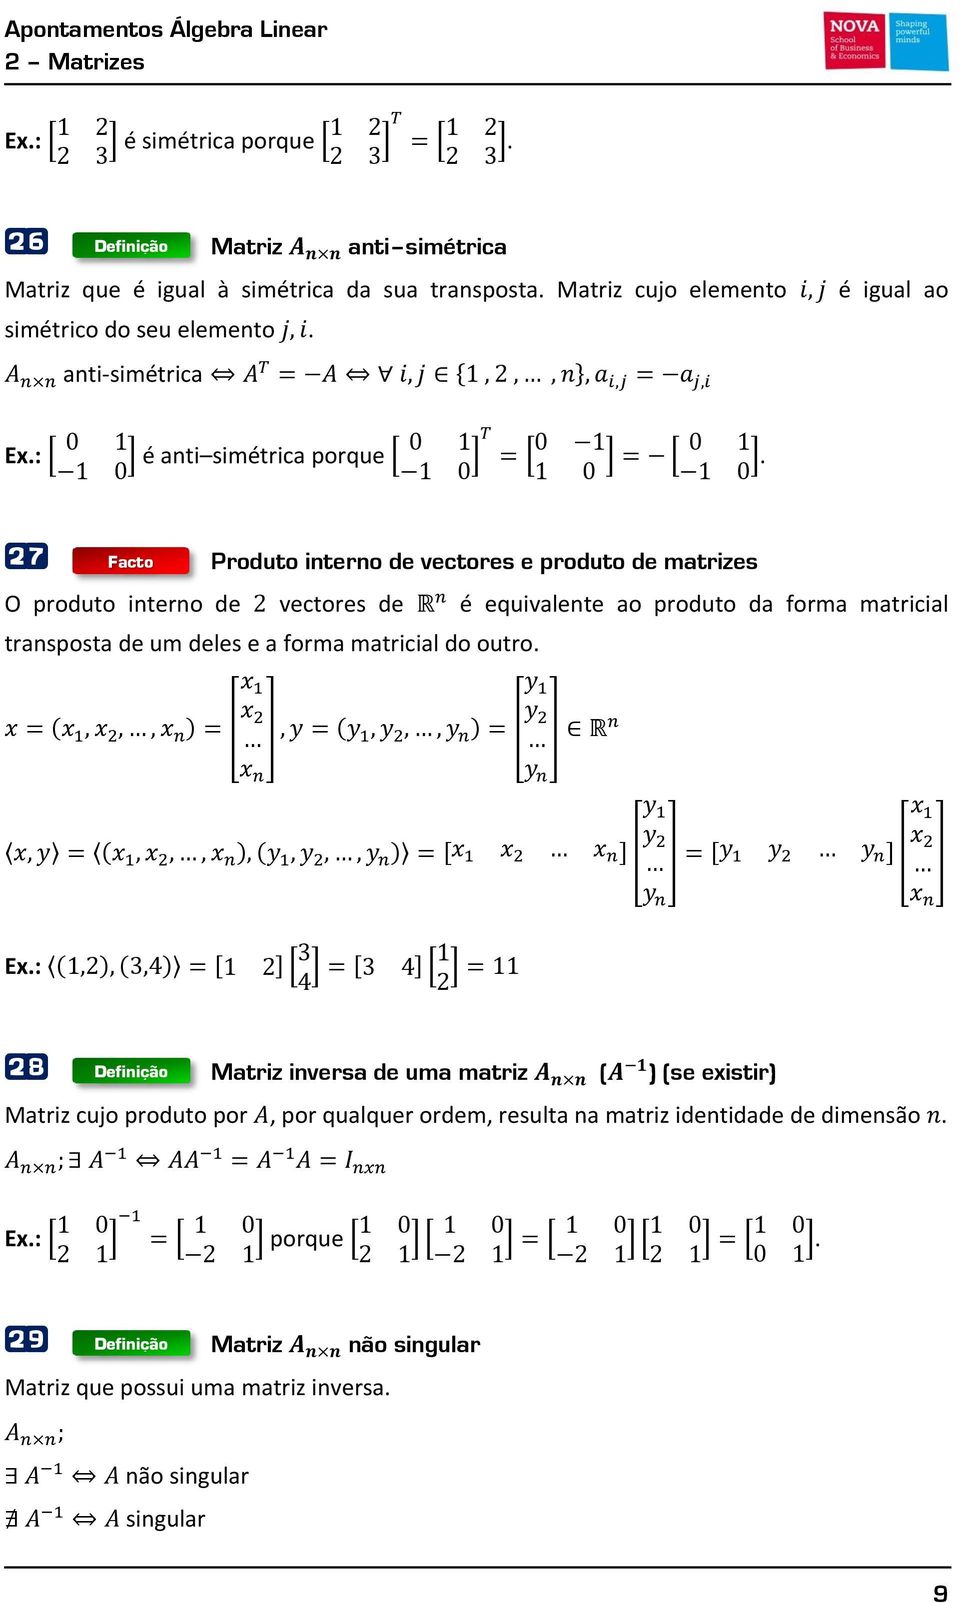 27 Facto Produto interno de vectores e produto de matrizes O produto interno de vectores de é equivalente ao produto da forma matricial transposta de um deles e a forma matricial do